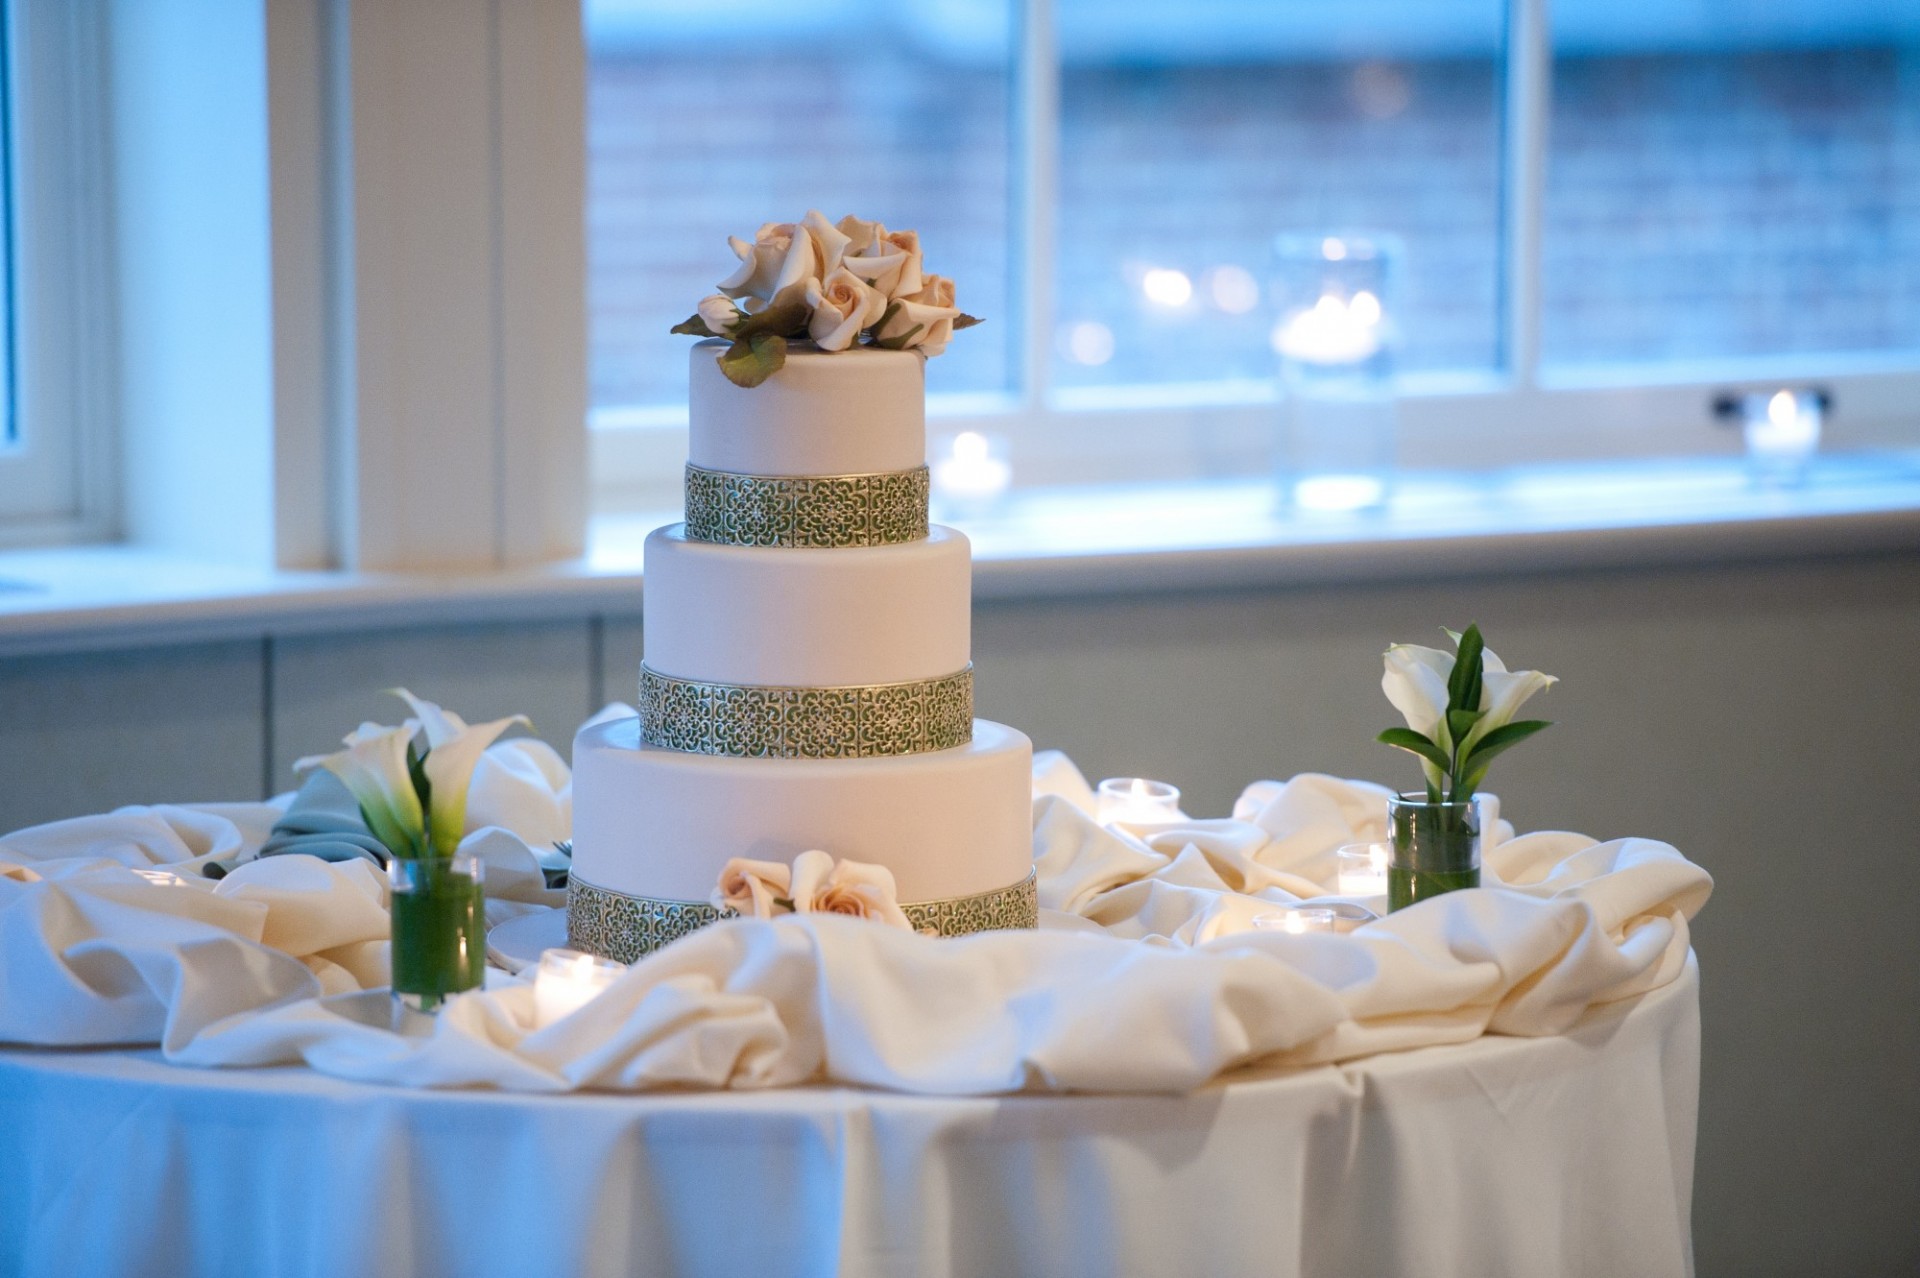 A romantic cake in a romantic setting.